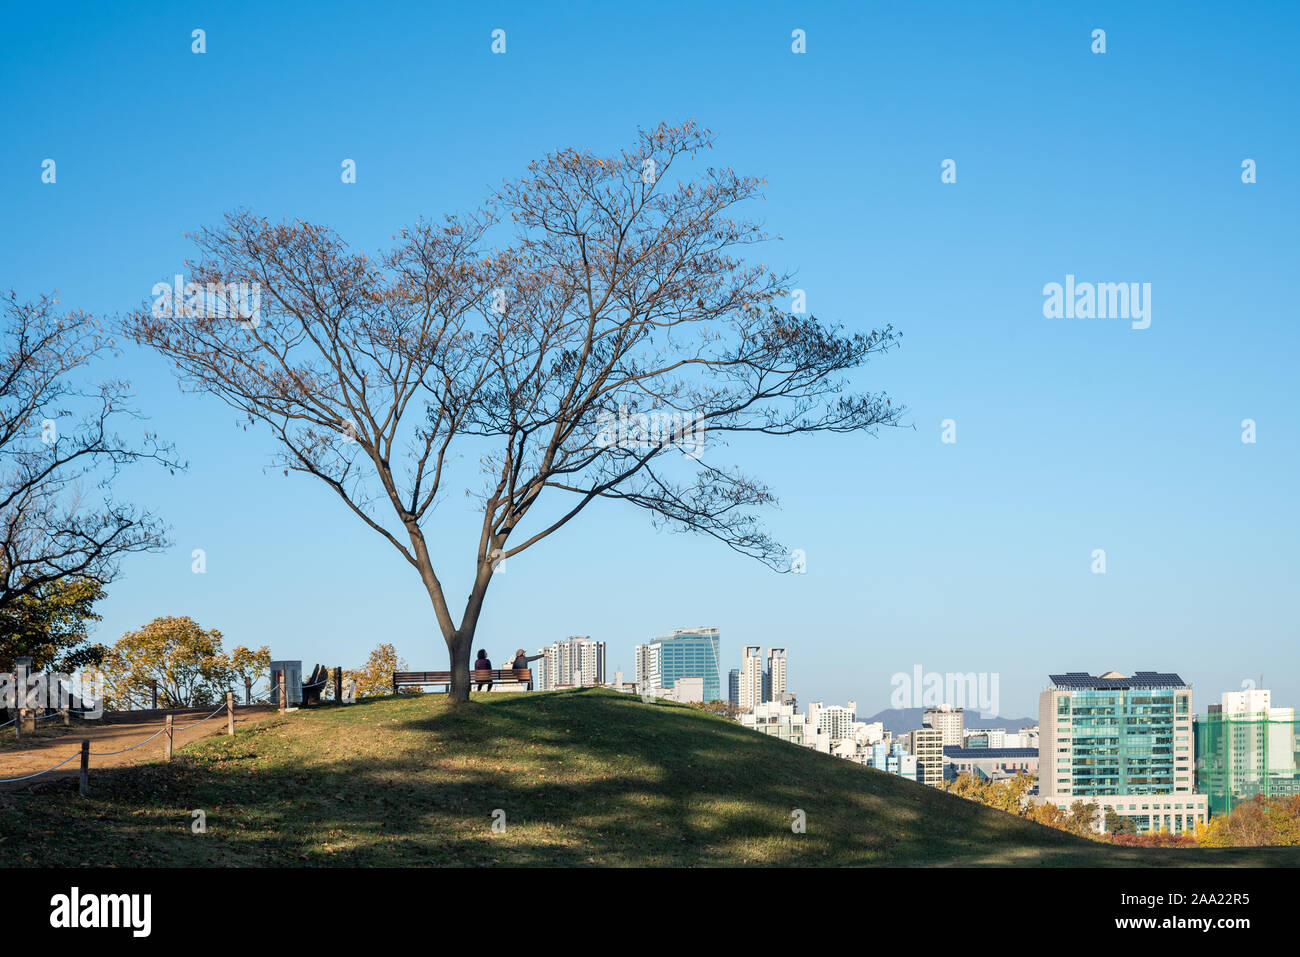 Fall leaves. Fall scenery. Seoul Olympic Park in South Korea. Stock Photo